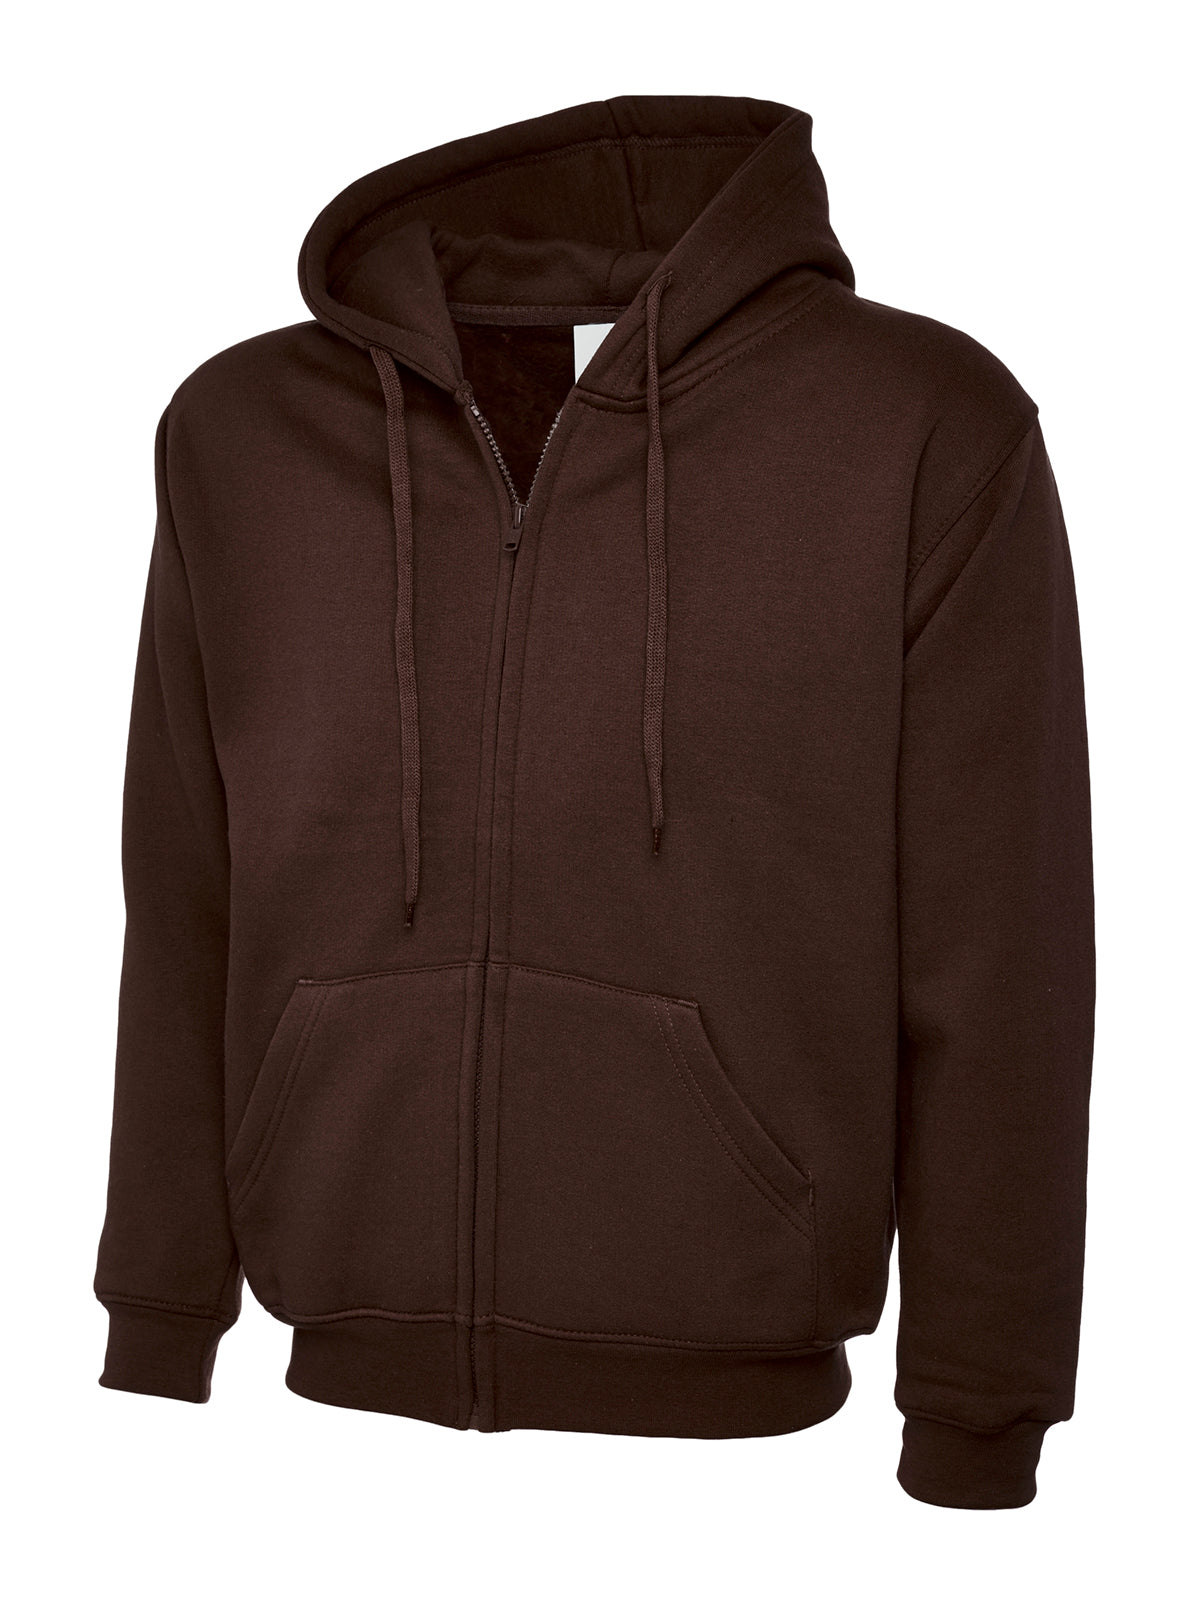 Uneek Adults Unisex Classic Full Zip Hooded Sweatshirt UC504 - Brown